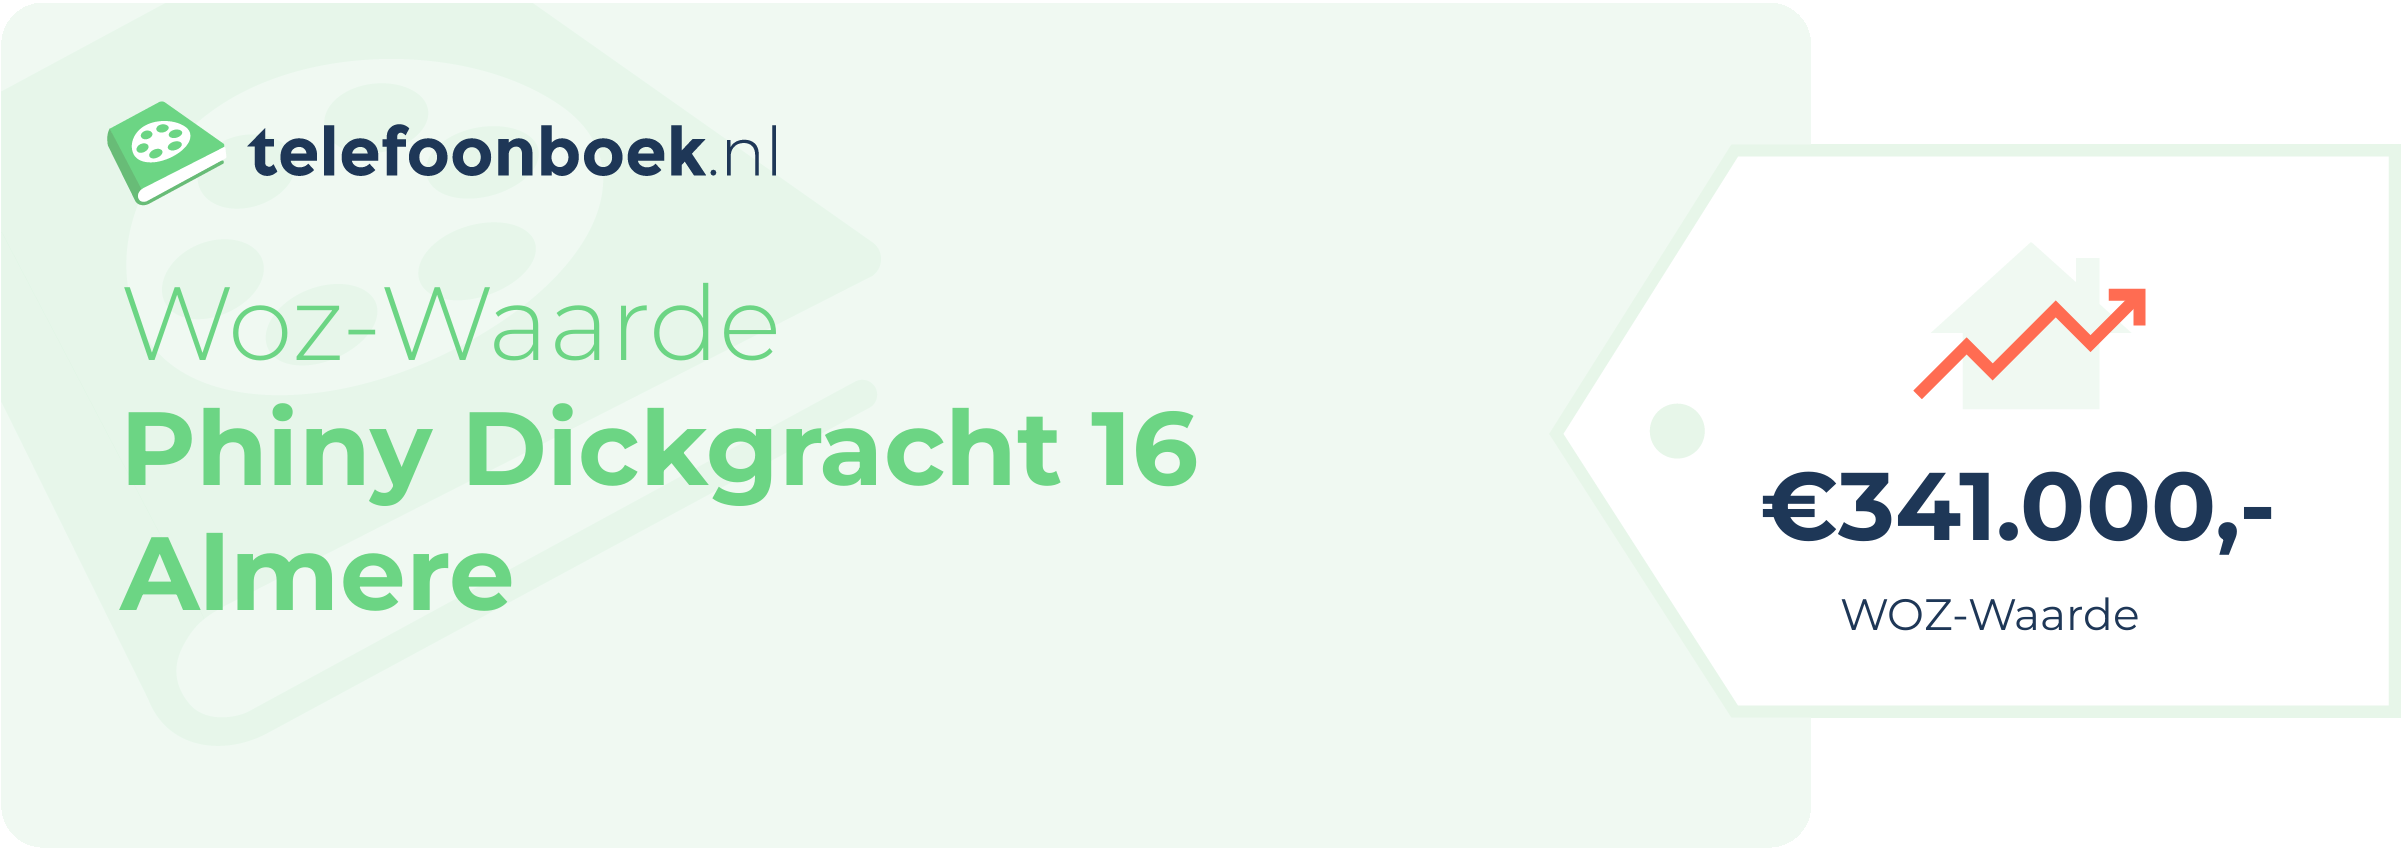 WOZ-waarde Phiny Dickgracht 16 Almere